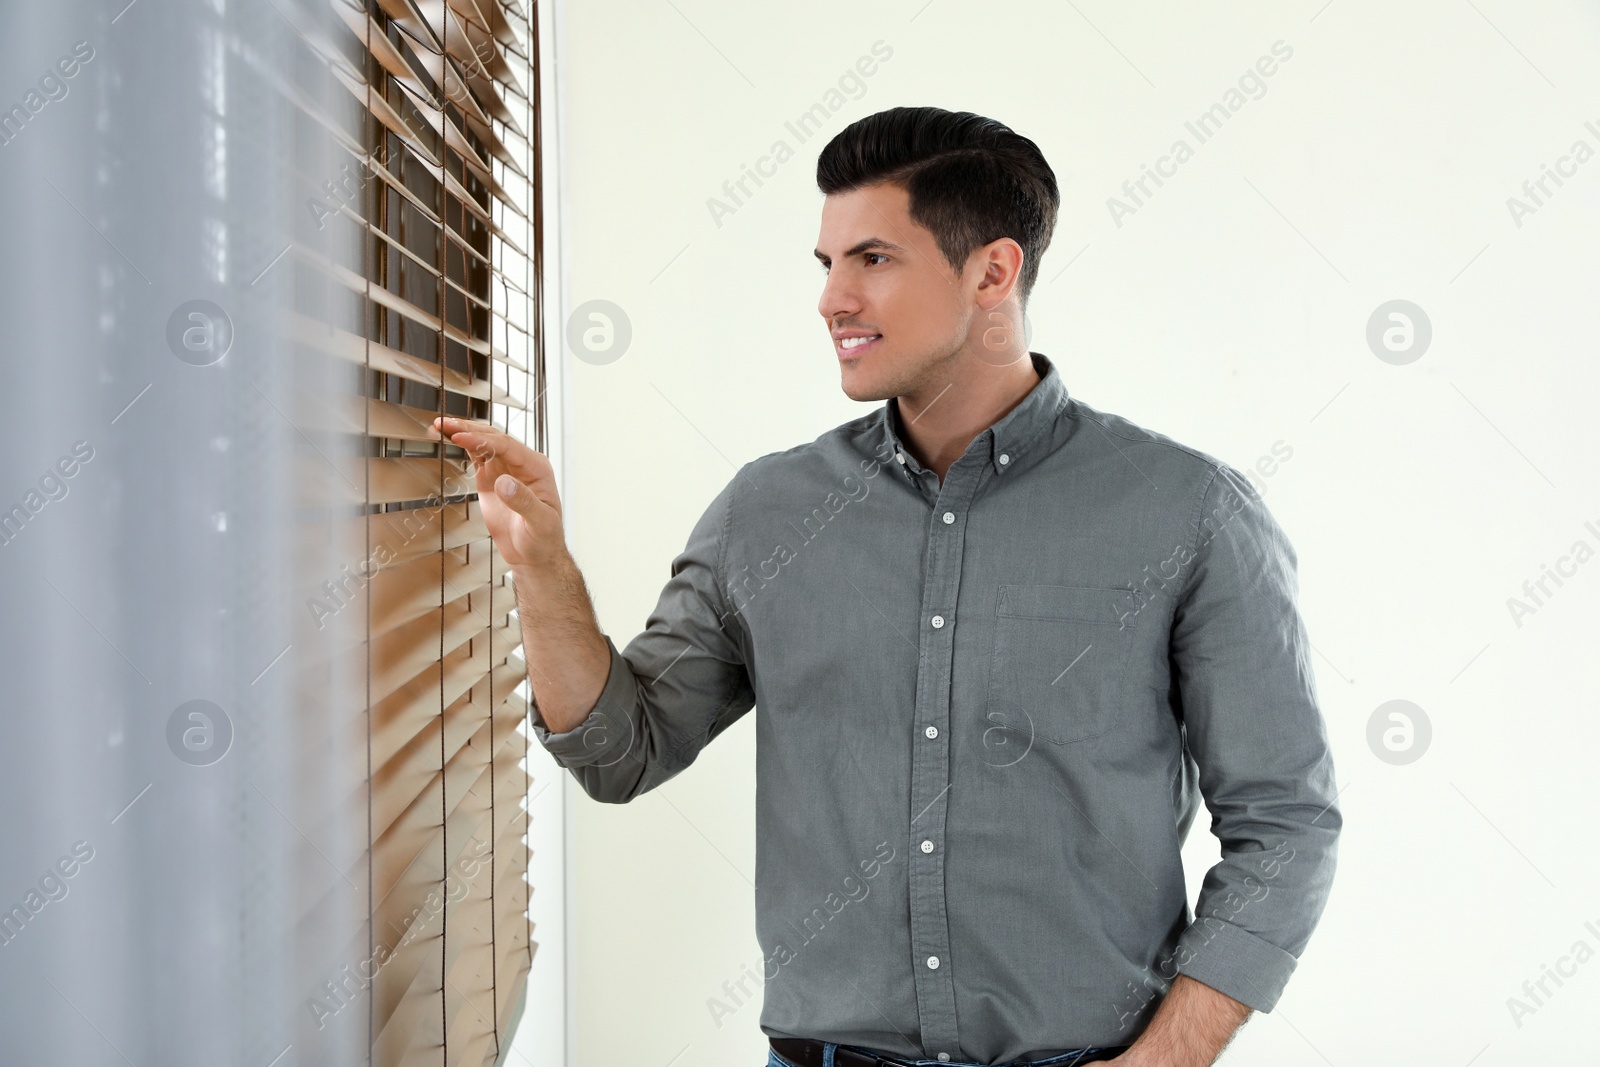 Photo of Handsome man looking through window blinds indoors